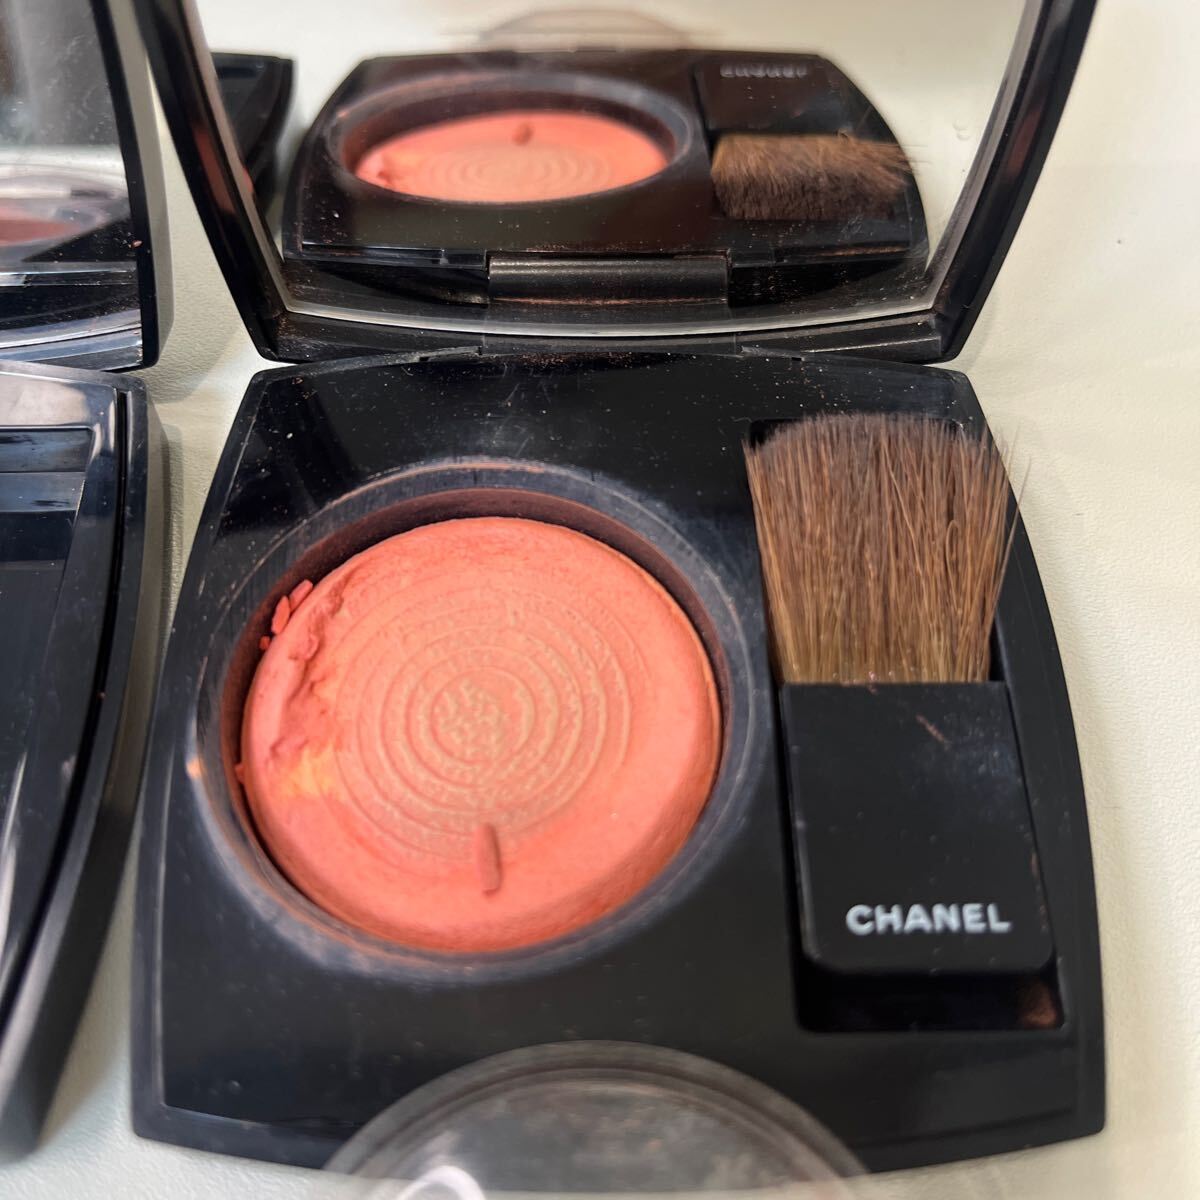  Chanel щеки цвет CHANEL пудра для лица CHANEL Chanel 